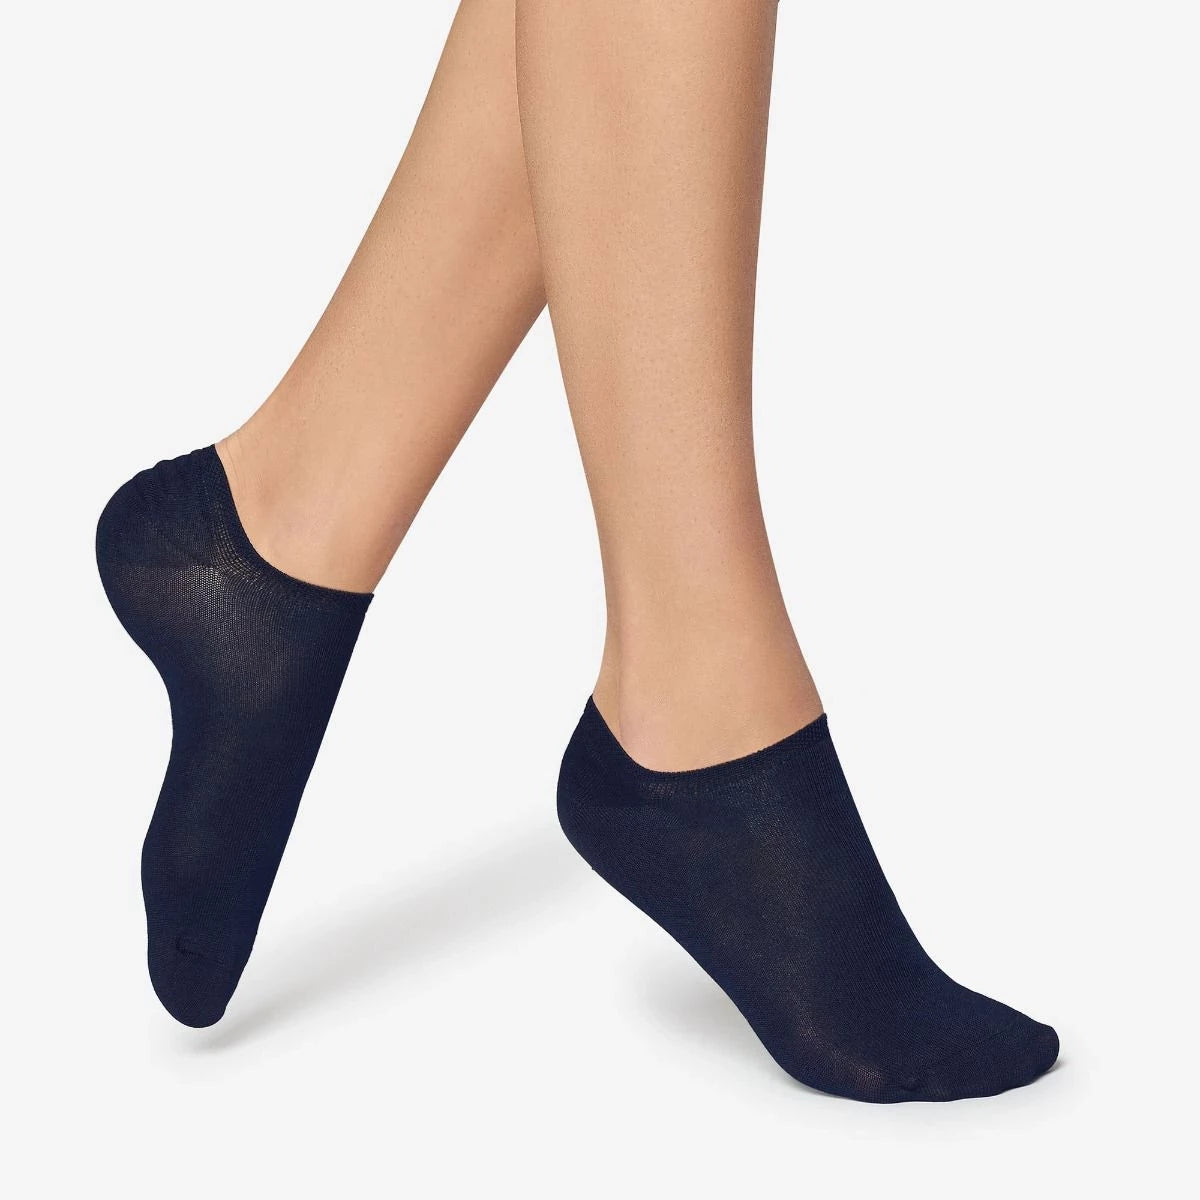 Omsa Minicalzino Liscio - navy light low cotton ankle socks